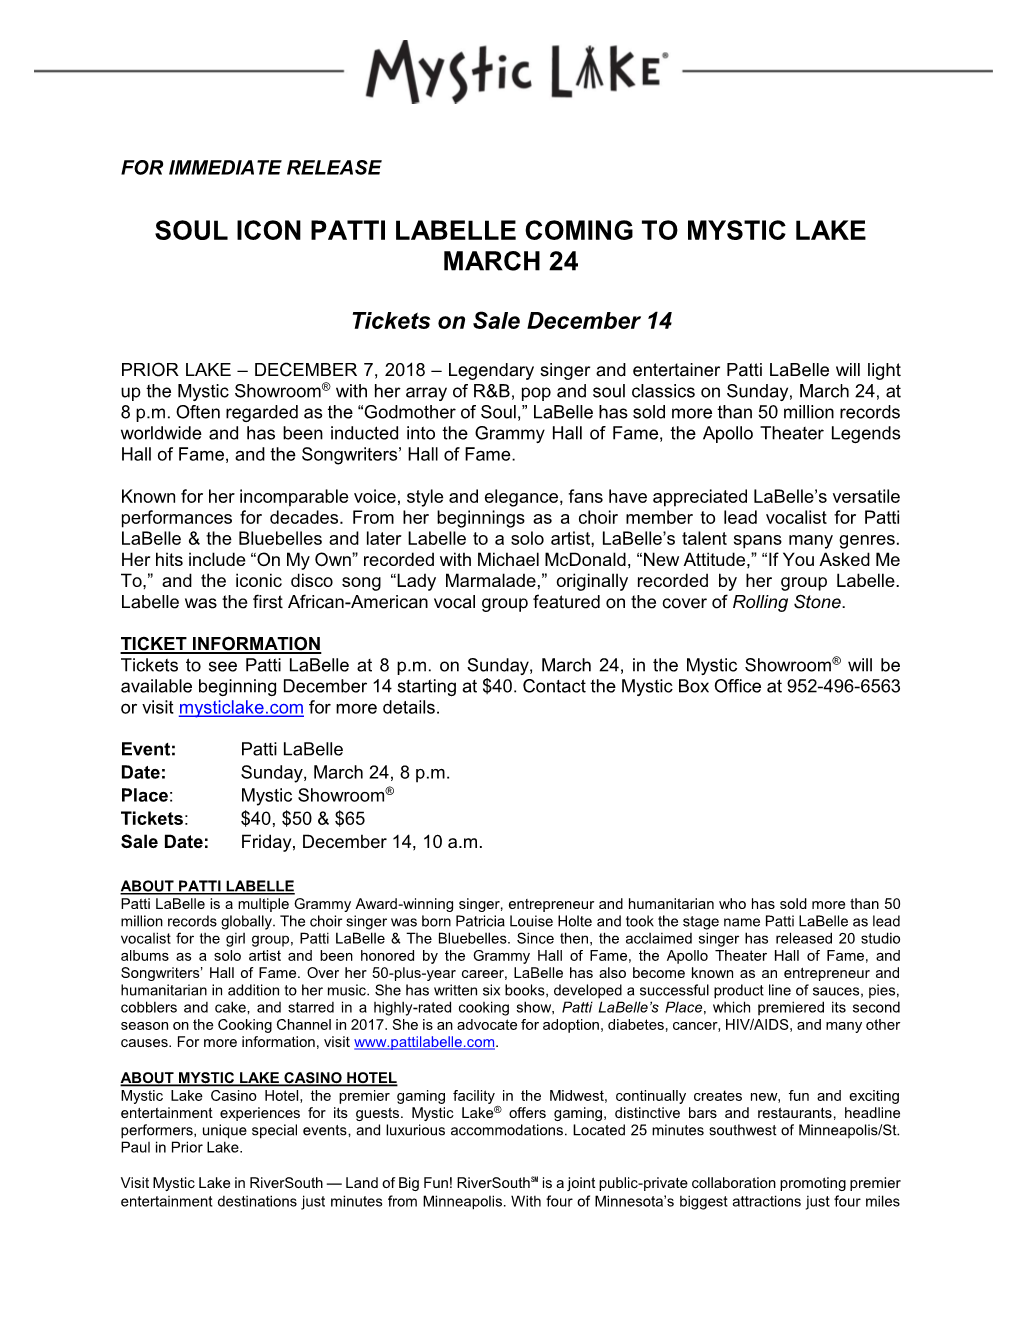 Soul Icon Patti Labelle Coming to Mystic Lake March 24